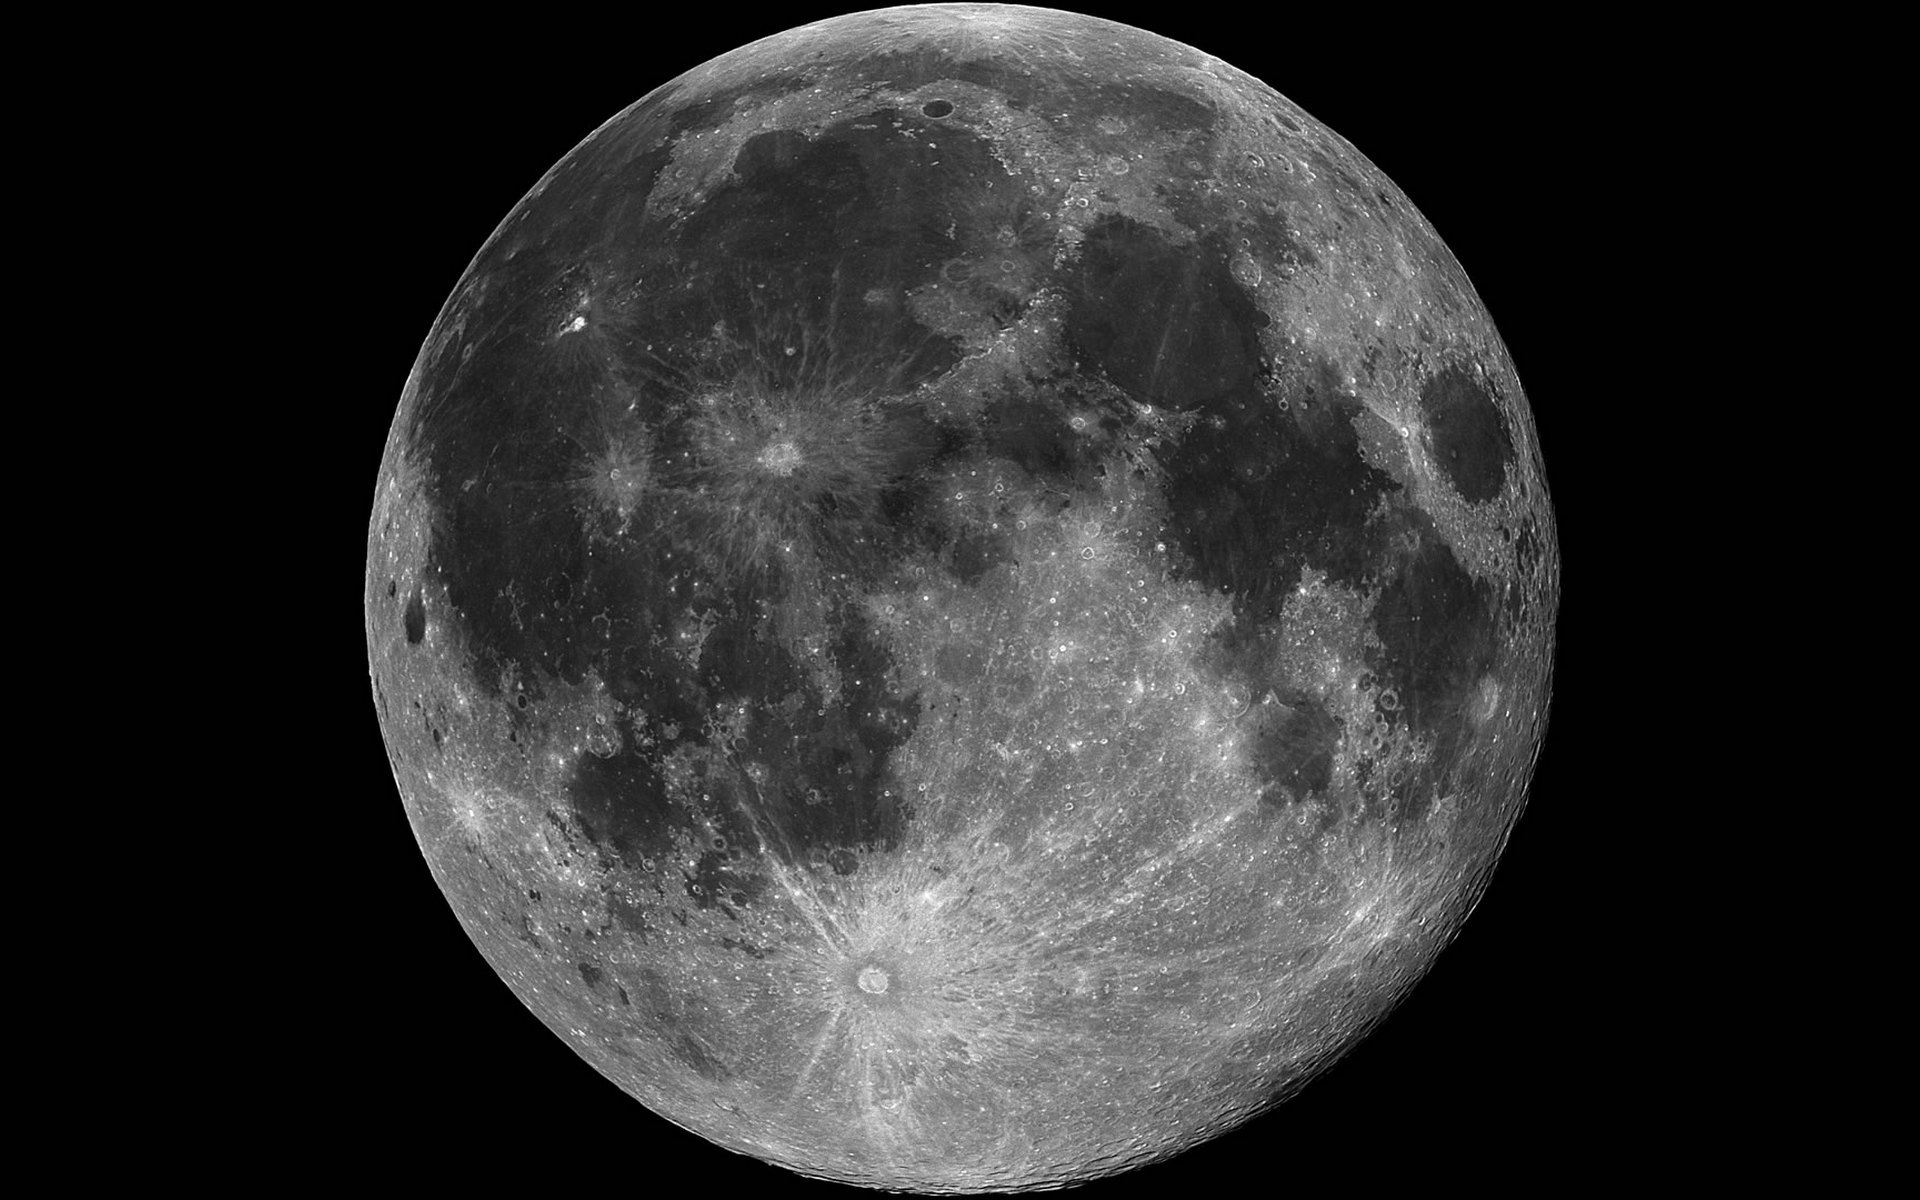 carta da parati mond,luna,bianco e nero,fotografia in bianco e nero,fotografia,oggetto astronomico